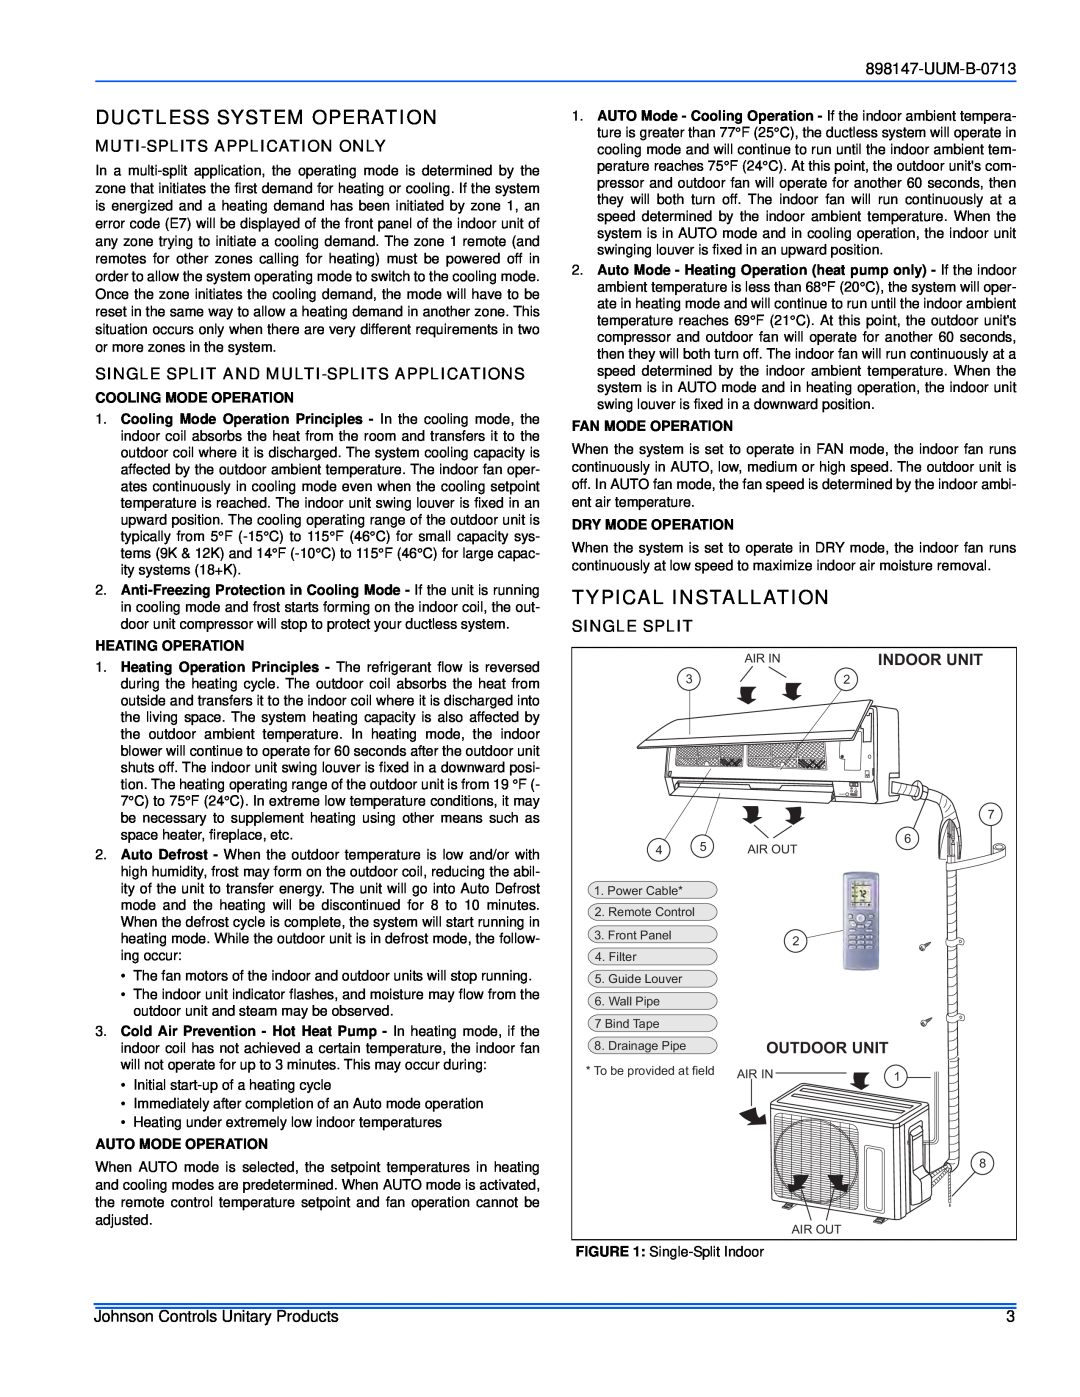 Johnson Controls 16 Ductless System Operation, Typical Installation, Muti-Splitsapplication Only, Single Split, UUM-B-0713 